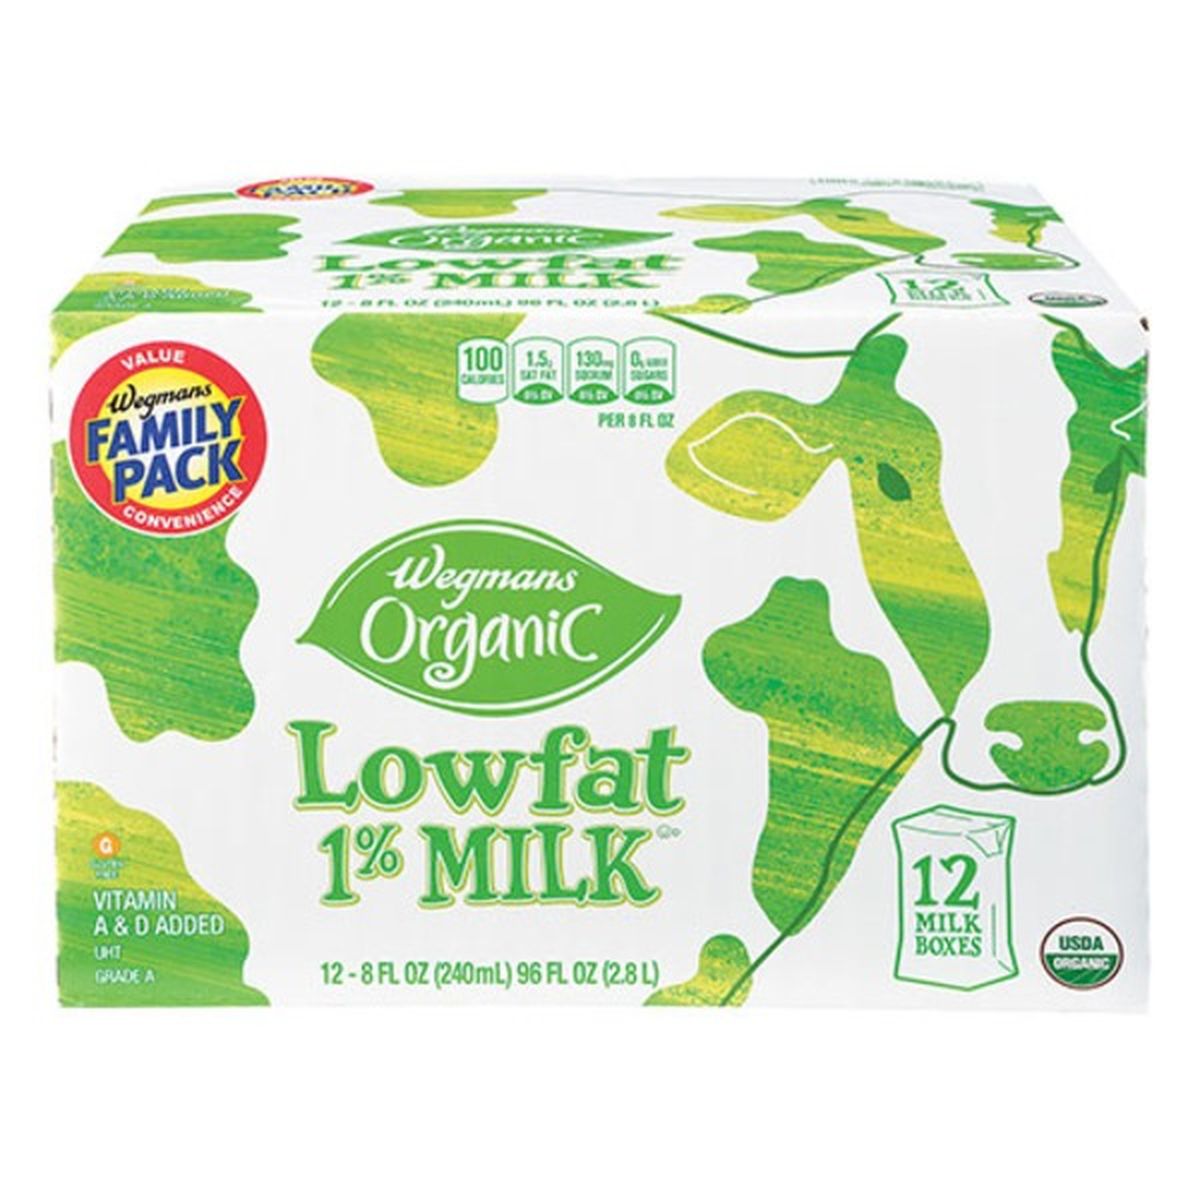 Calories in Wegmans Organic Lowfat 1% Milk, 12 Milk Boxes, FAMILY PACK